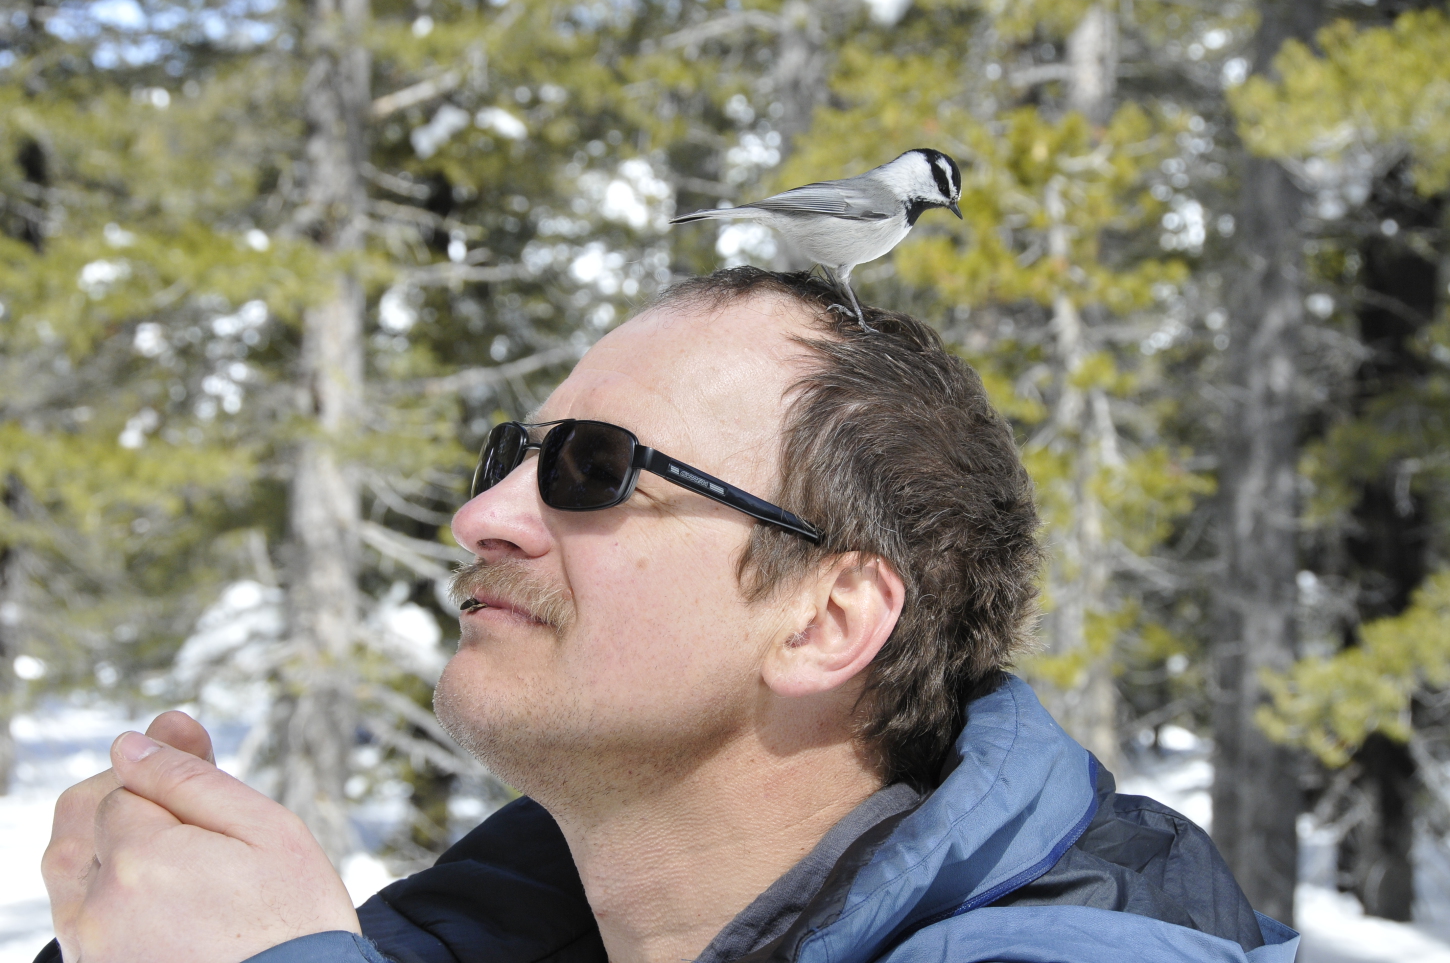 Vladimir Pravosudov in the field, with a chickadee on his head.